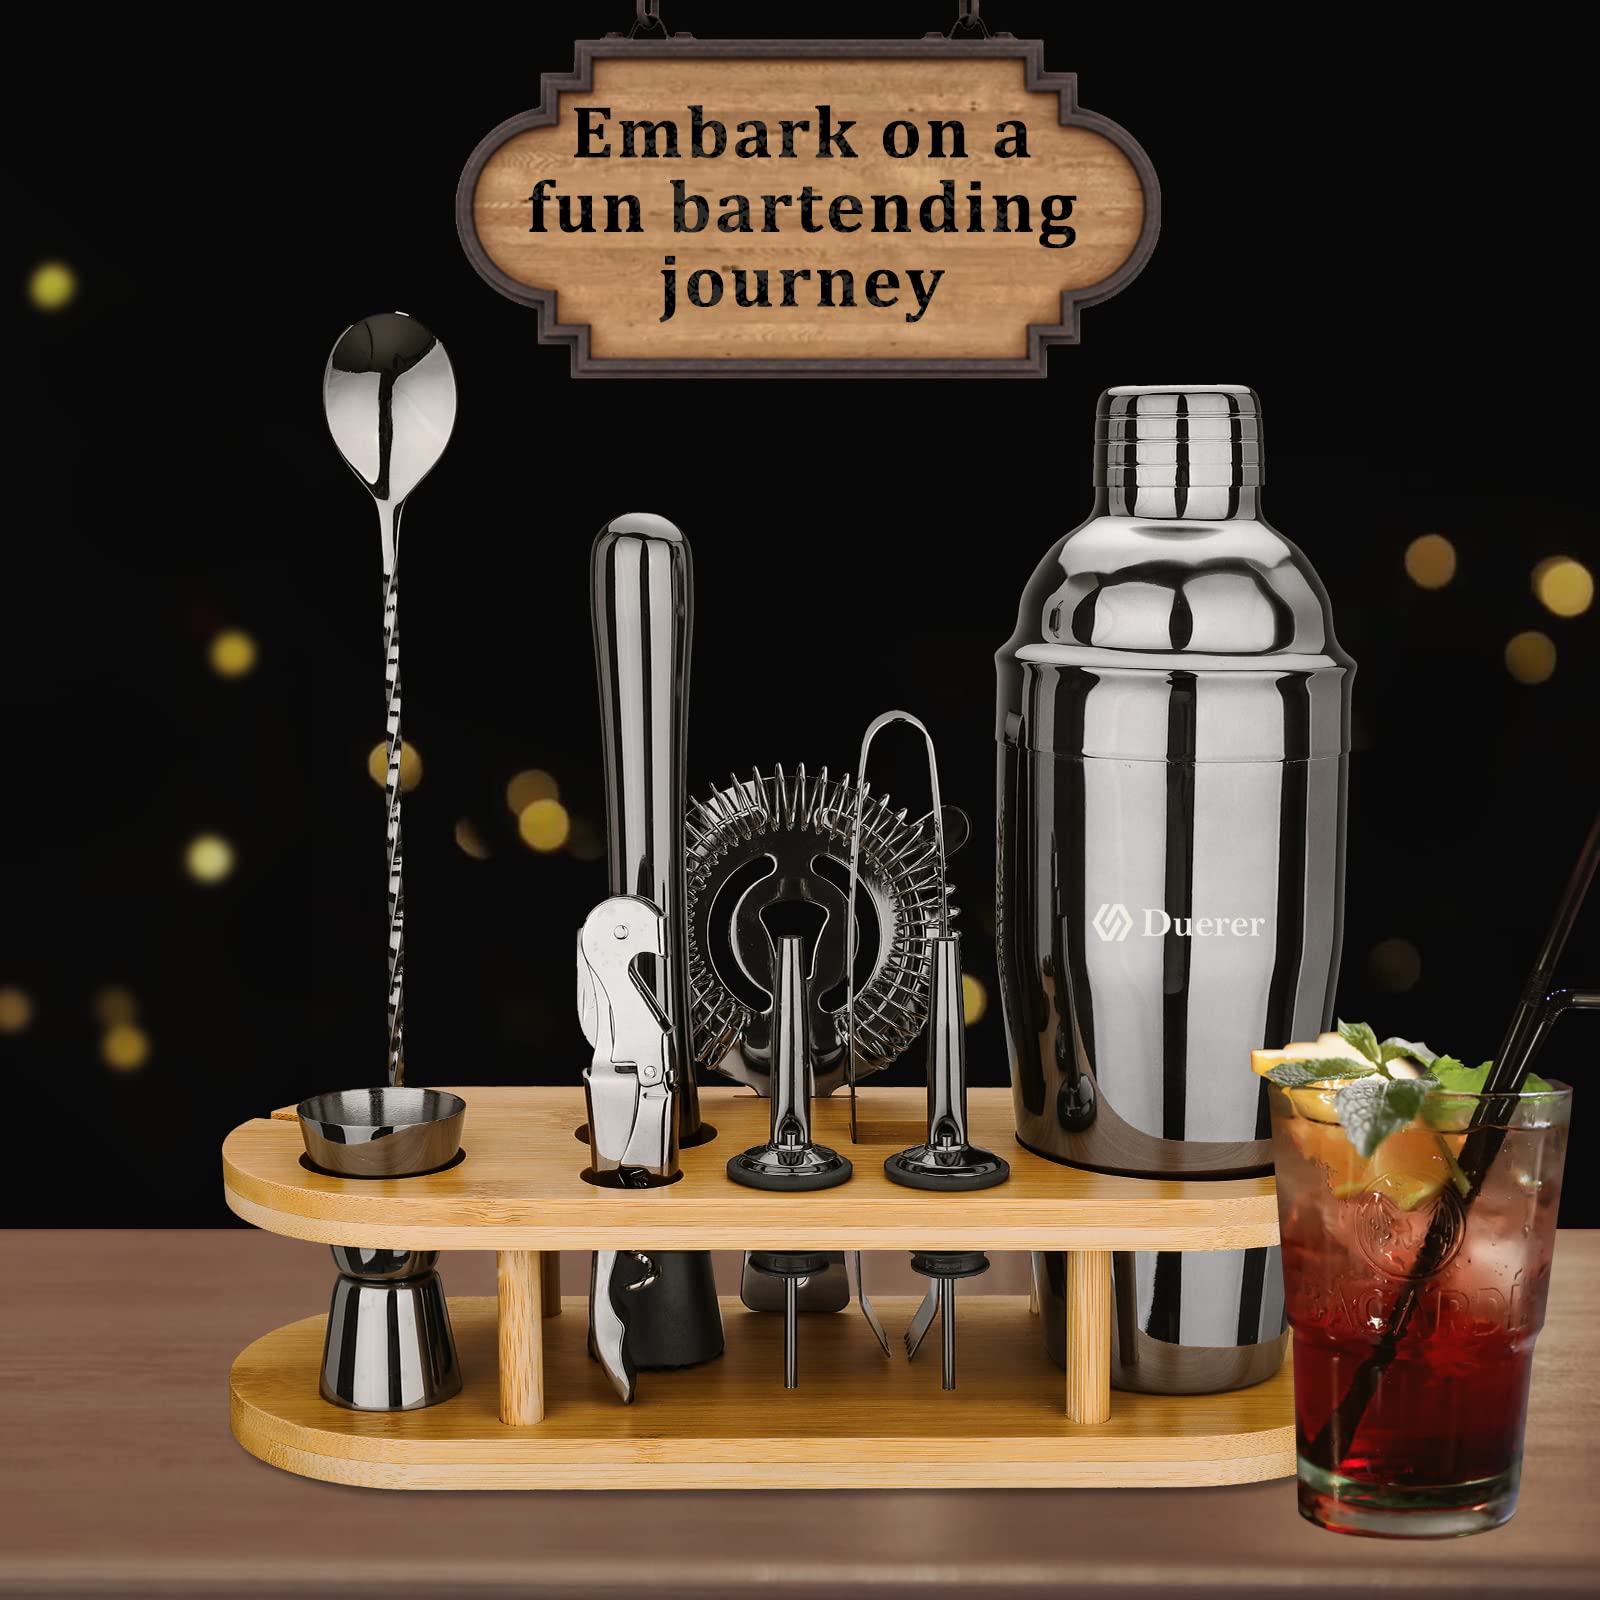 Duerer Bartender Kit Cocktail Shaker Set 11-Piece(Black)